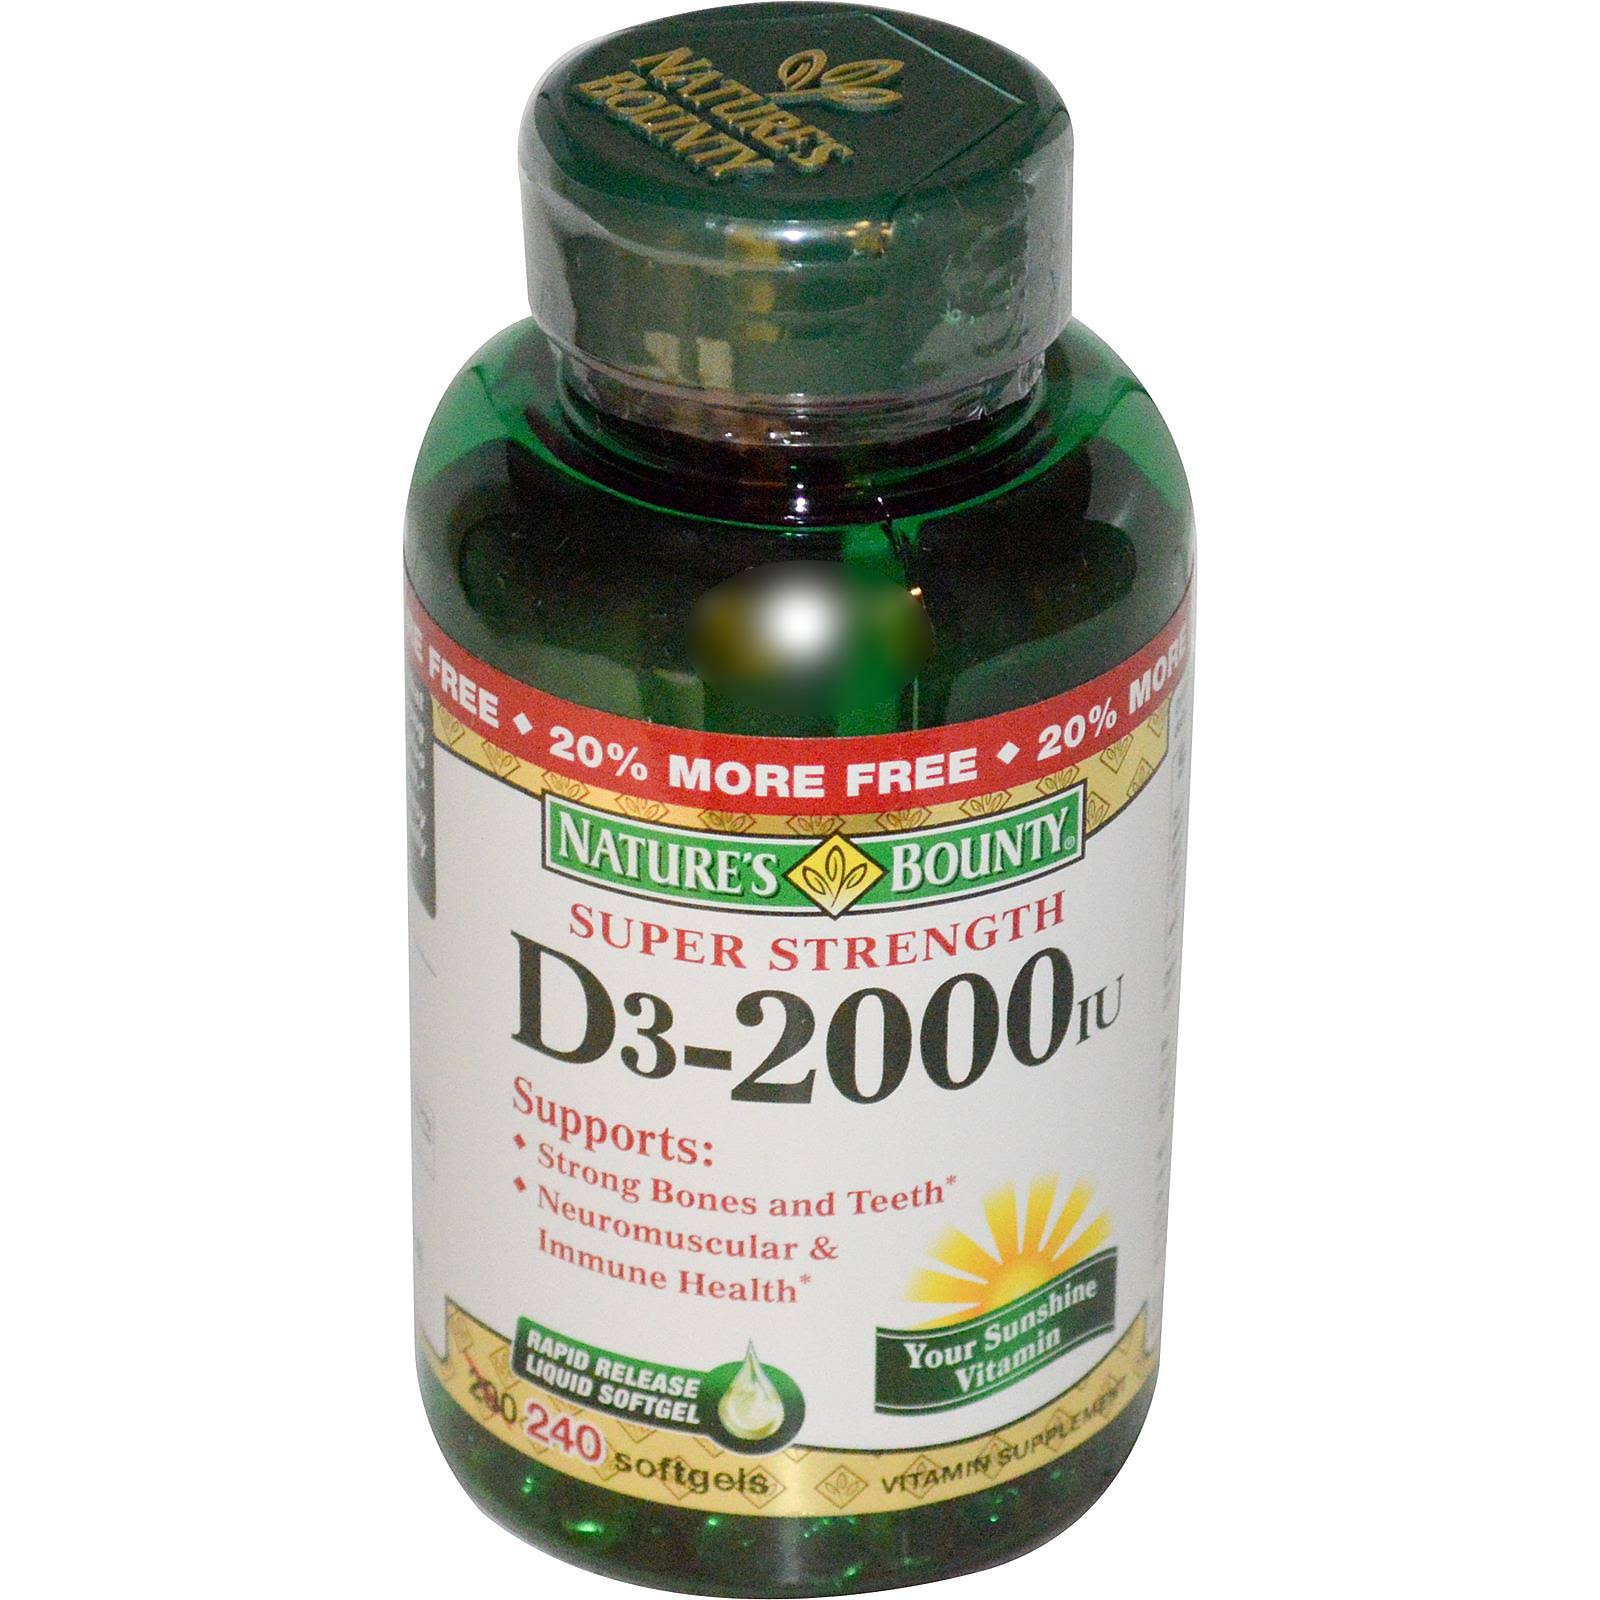 Nature's Bounty D3 Vitamin Supplement - 2000 IU, 240 Count